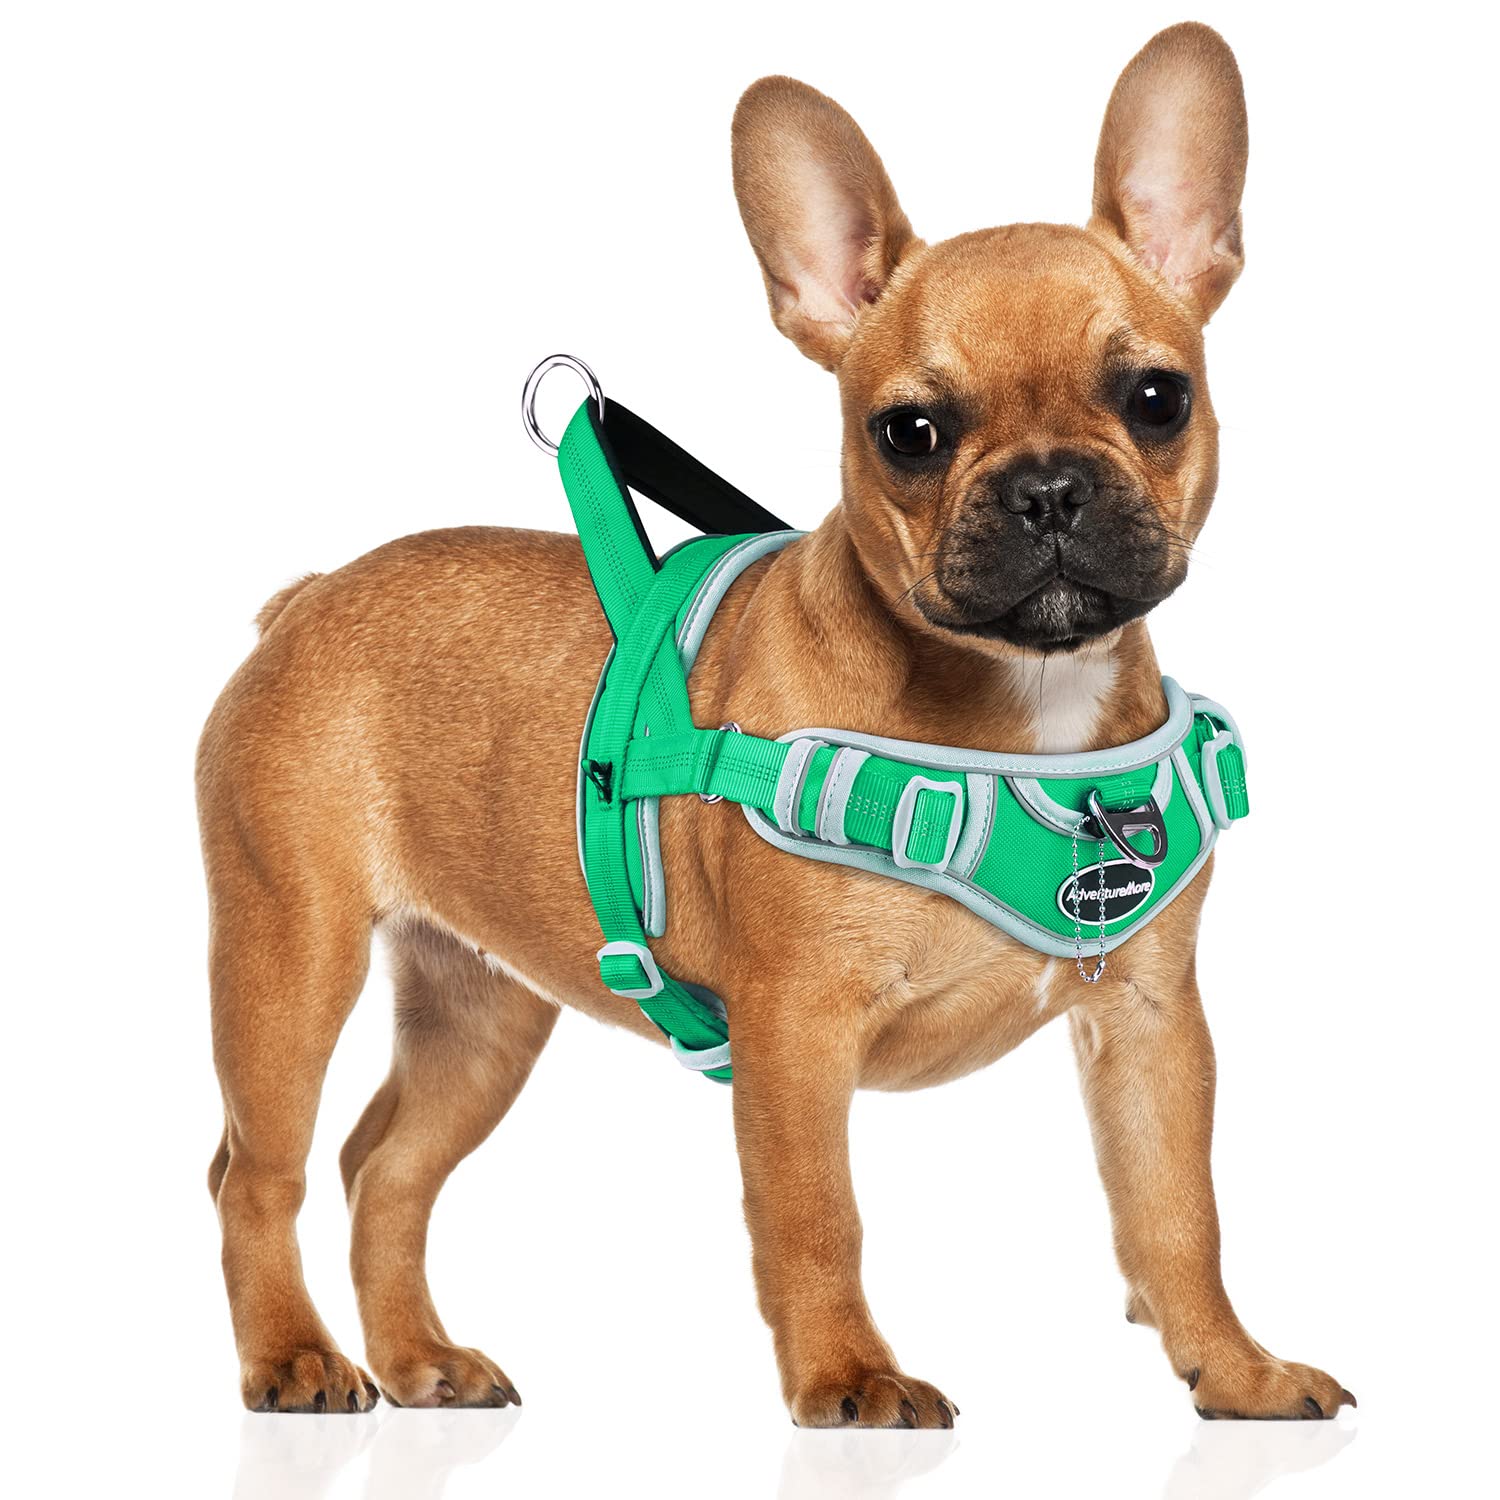 Adventuremore Dog Harness For Small Dogs No Pull, Dog Halter Harness Adjustable Reflective Dog Vest Escape Proof Dog Harness Wit